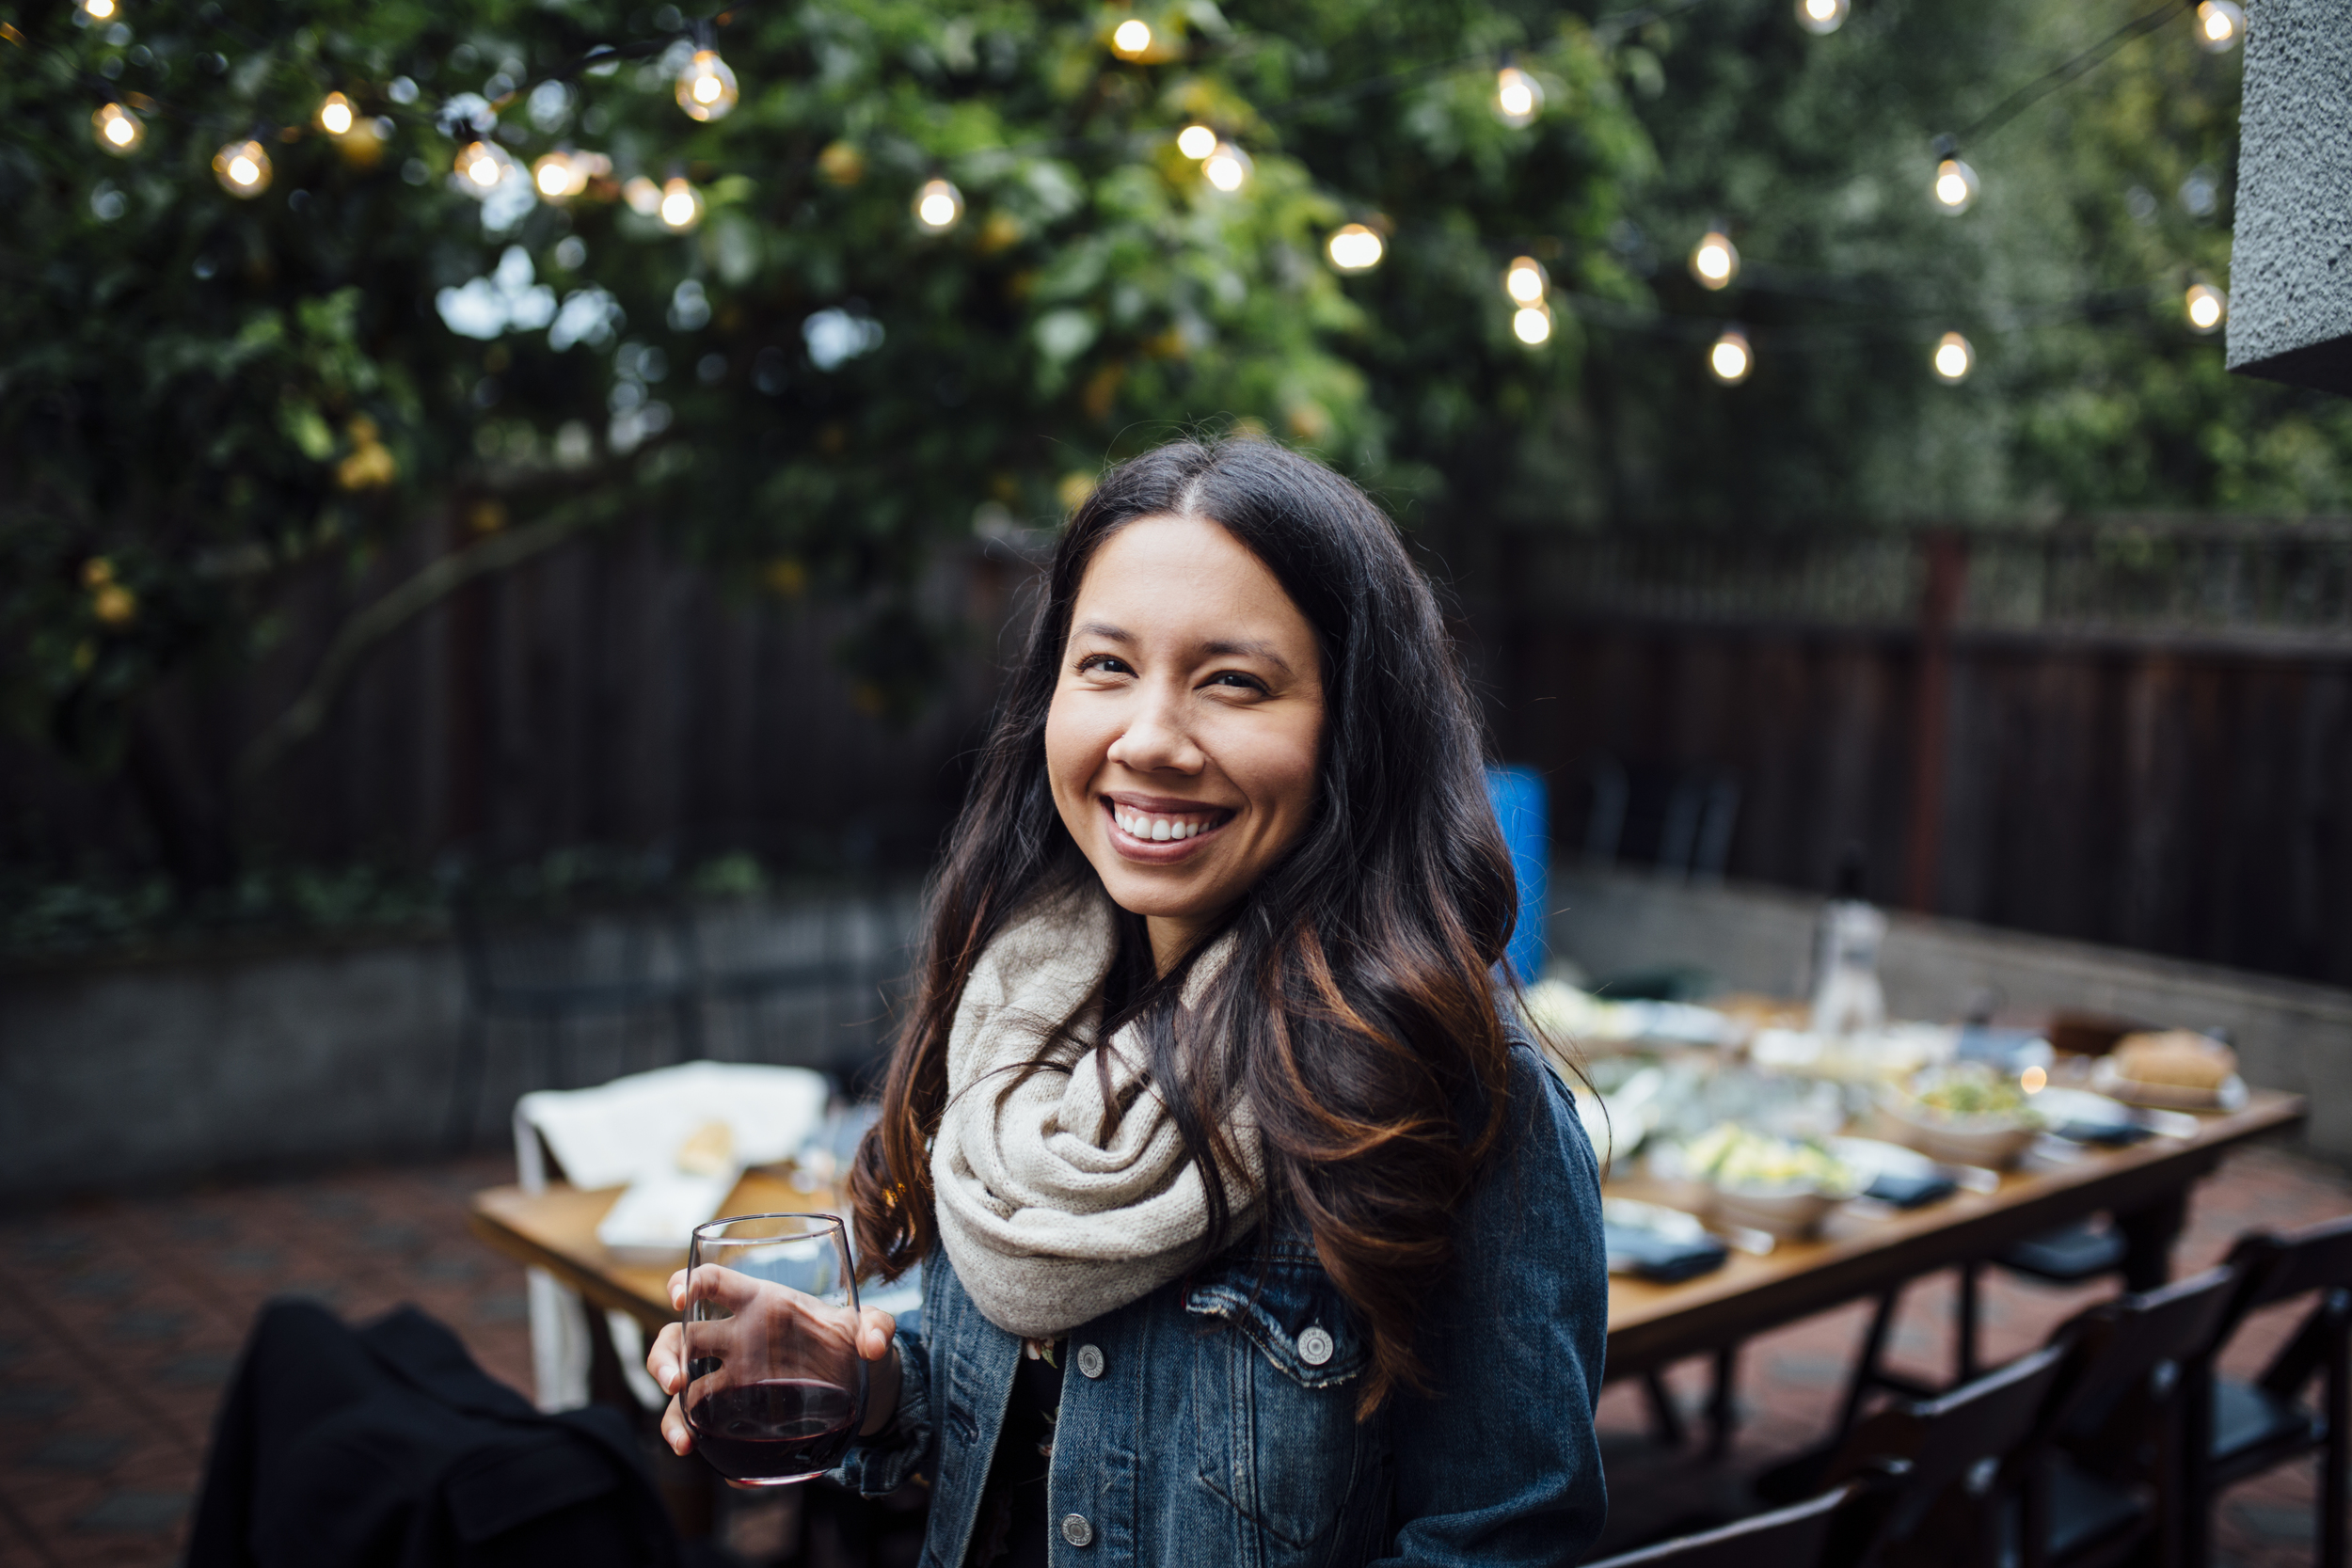  Intimate Backyard Dinner Party | Styled Shoot | Nataly Zigdon Photography | San Francisco 